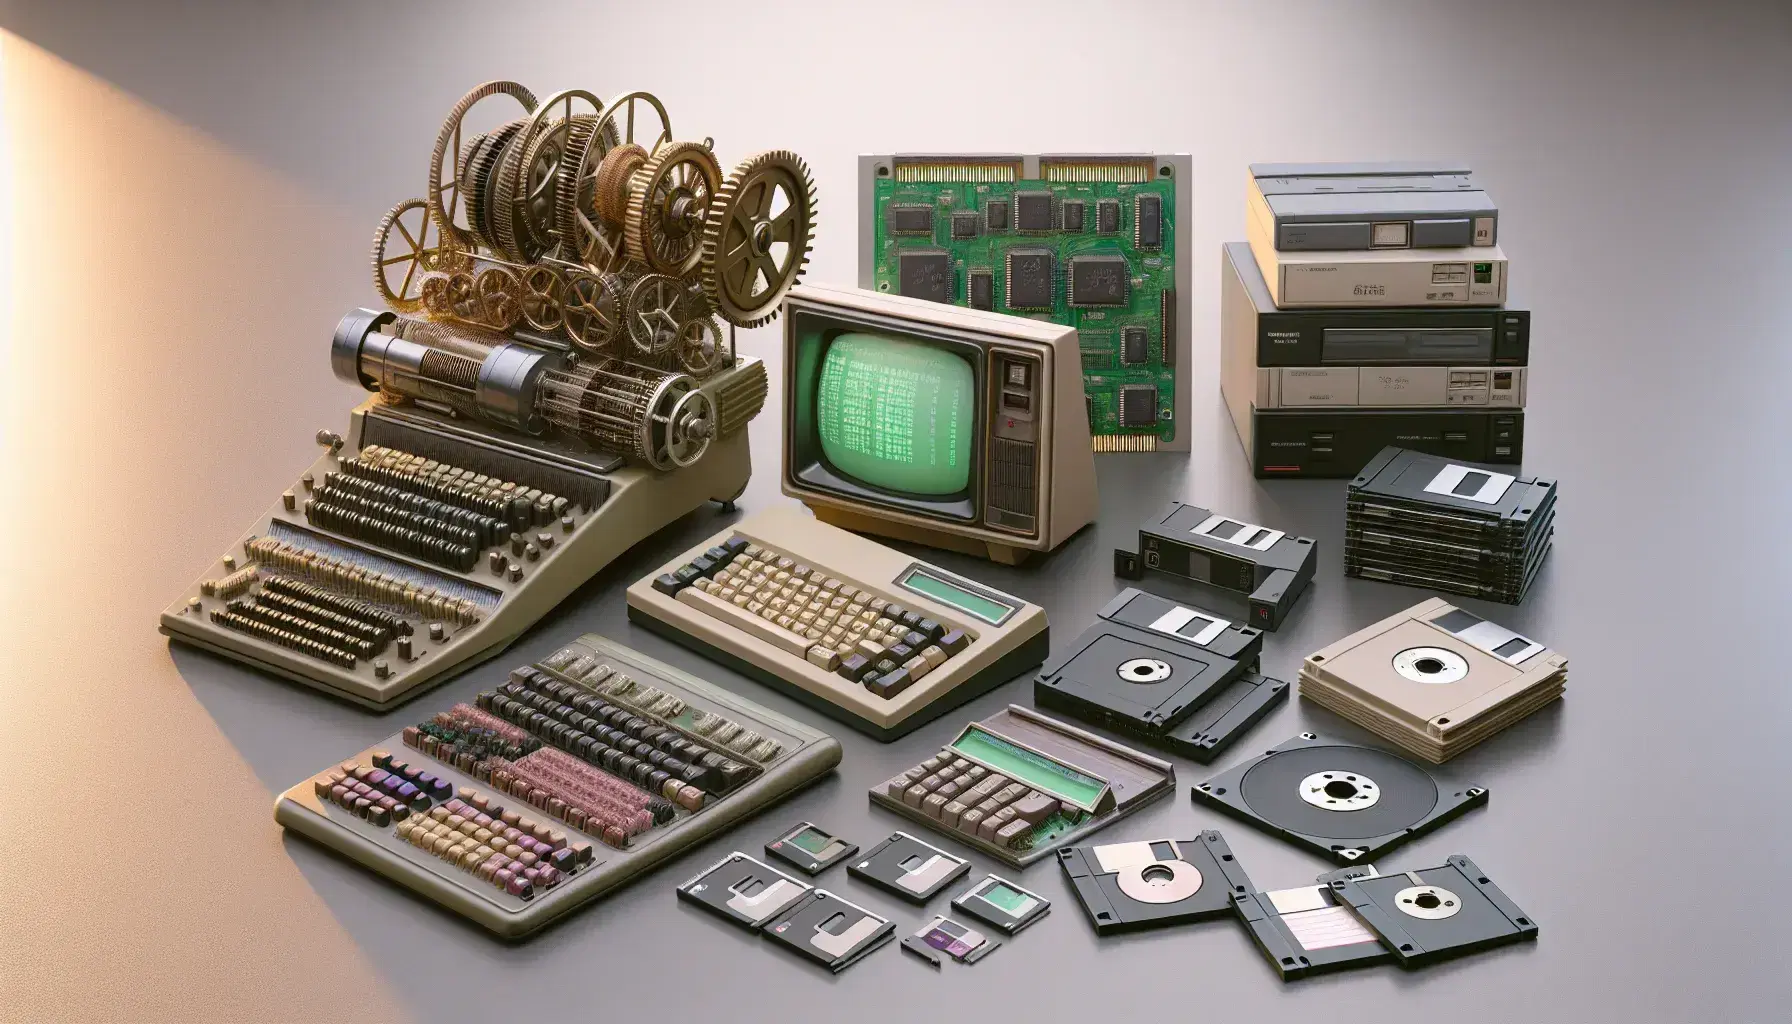 Colección de dispositivos de cómputo antiguos a modernos, incluyendo calculadora mecánica, PC de los 80, disquetes y tablet actual.